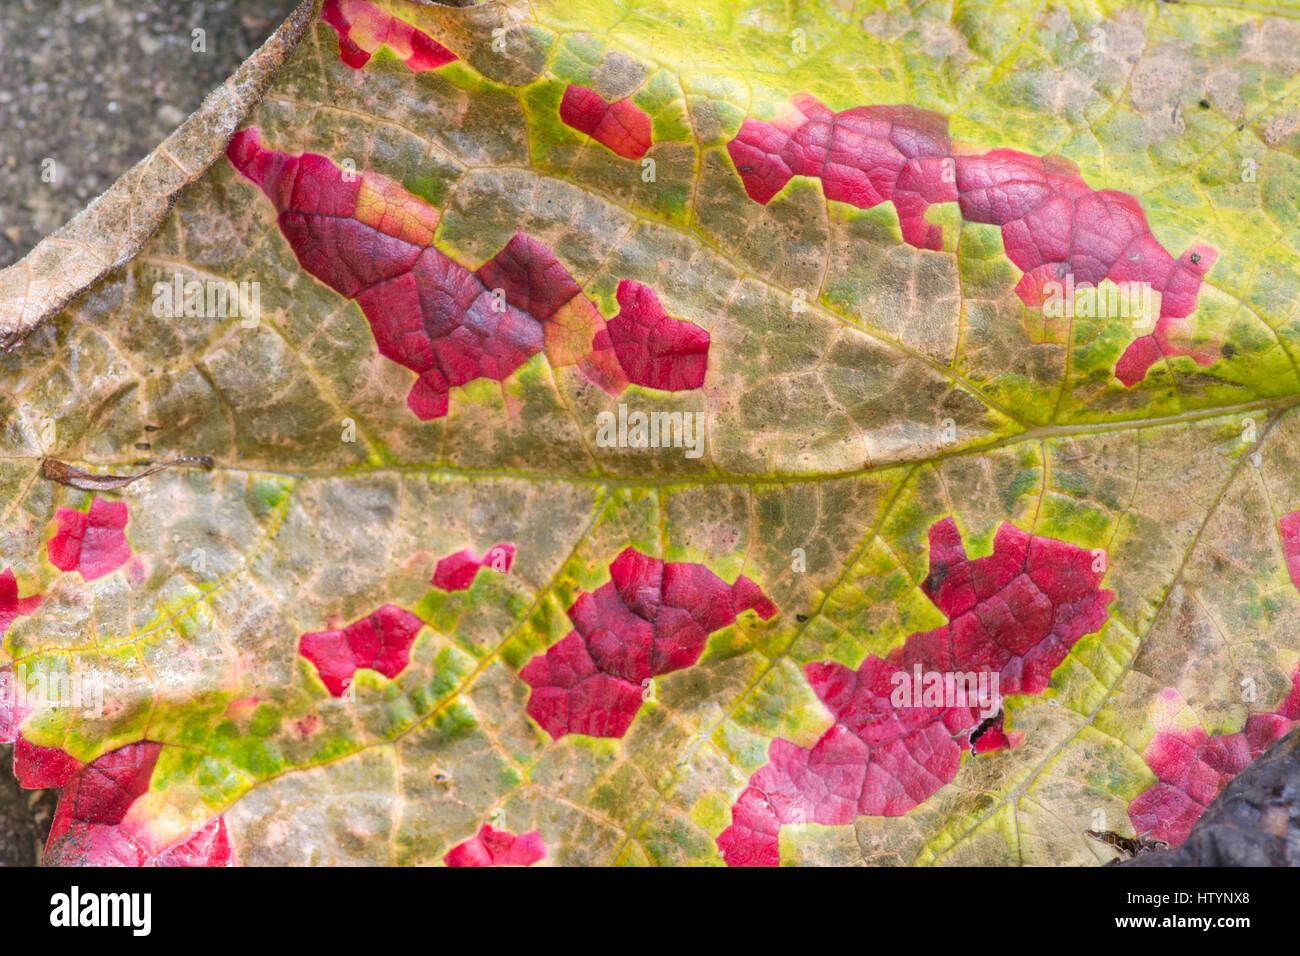 Red spots on vine leaf Stock Photo